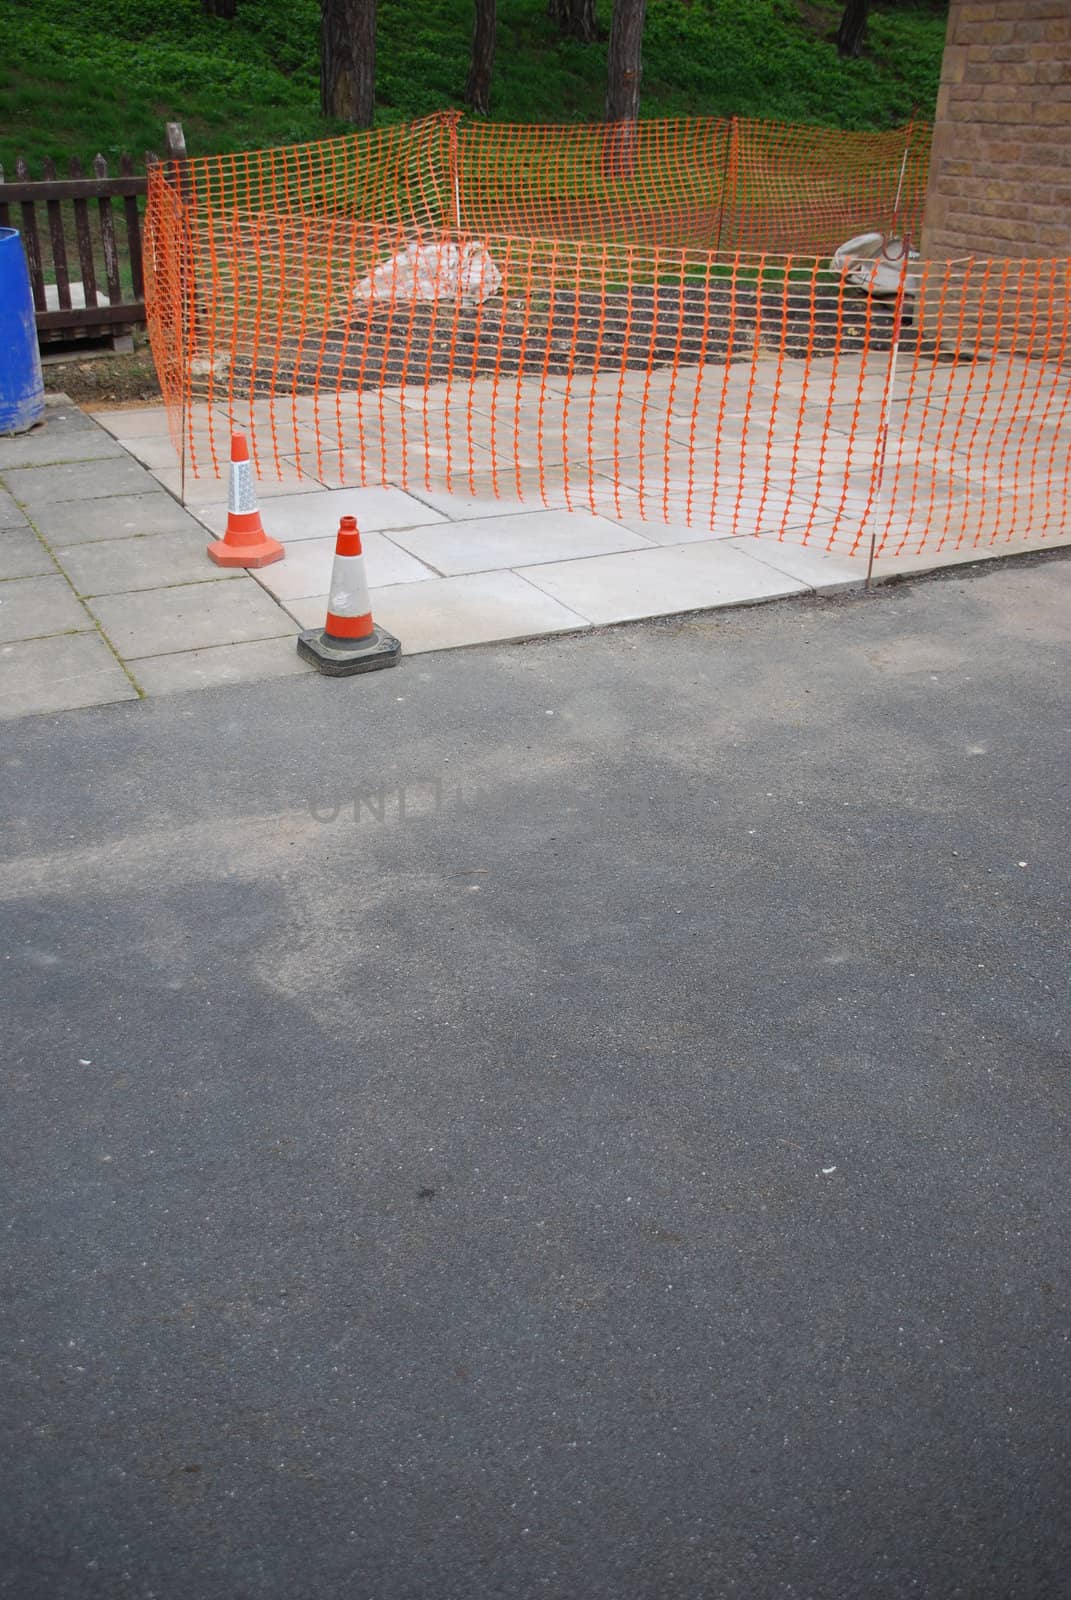 sidewalk construction site with orange cones and delimitation area